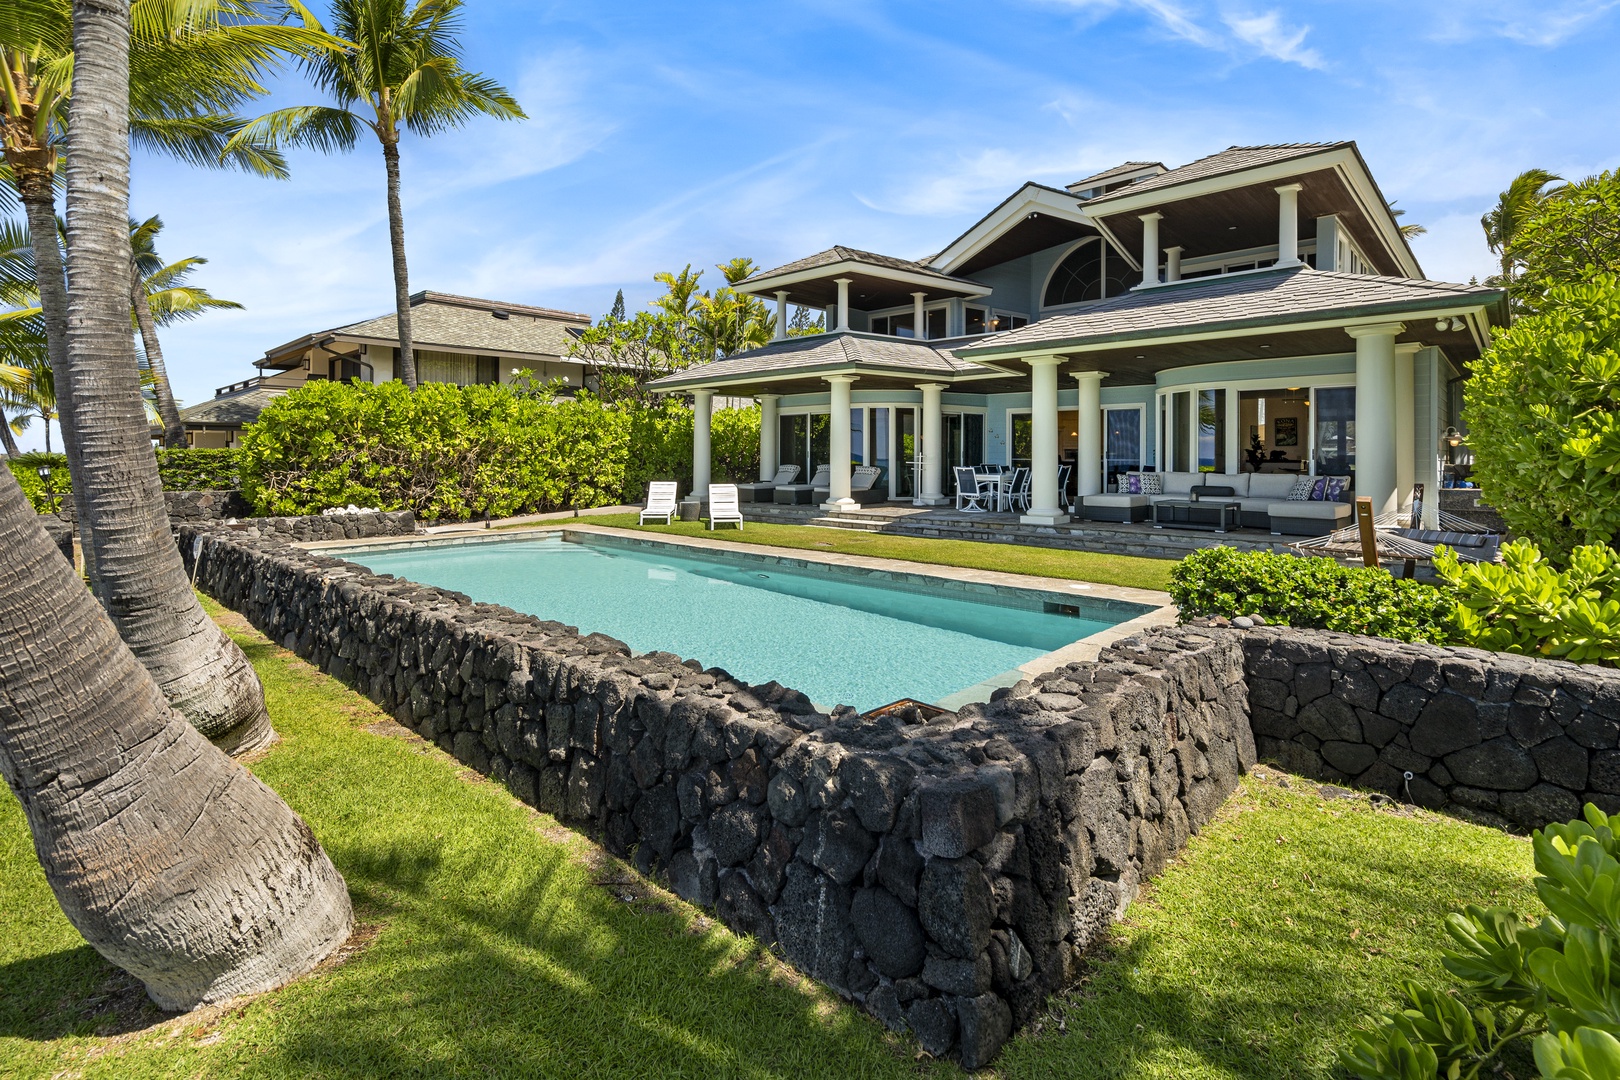 Kailua Kona Vacation Rentals, Kona Blue - Swim to your hearts desire!